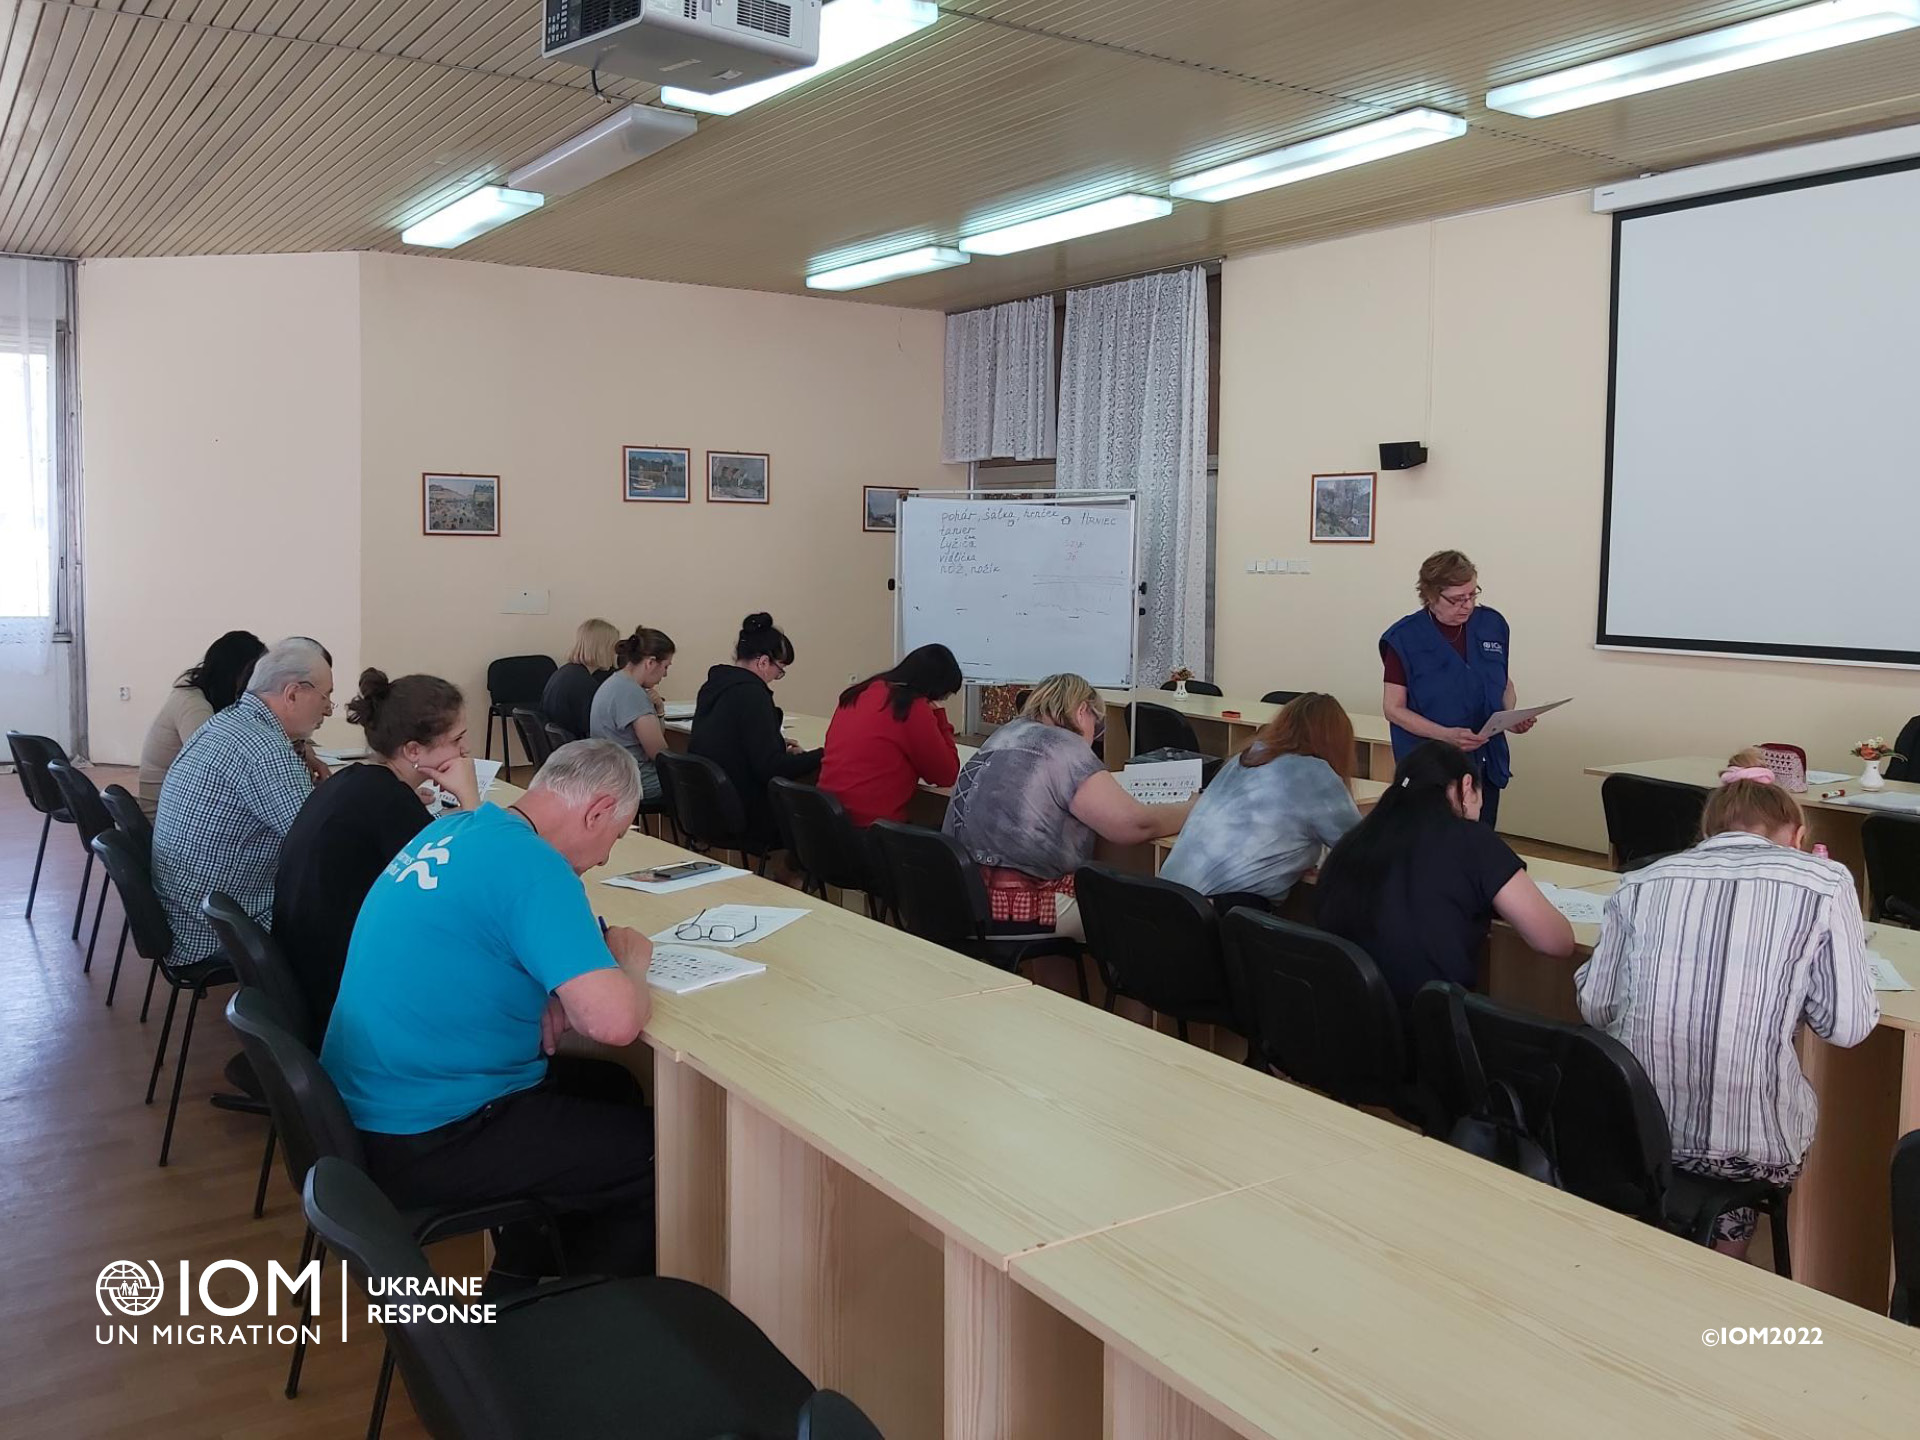 IOM Slovak language course in the Gabčíkovo Accommodation Facility for people from Ukraine. Photo © International Organization for Migration (IOM) 2022.